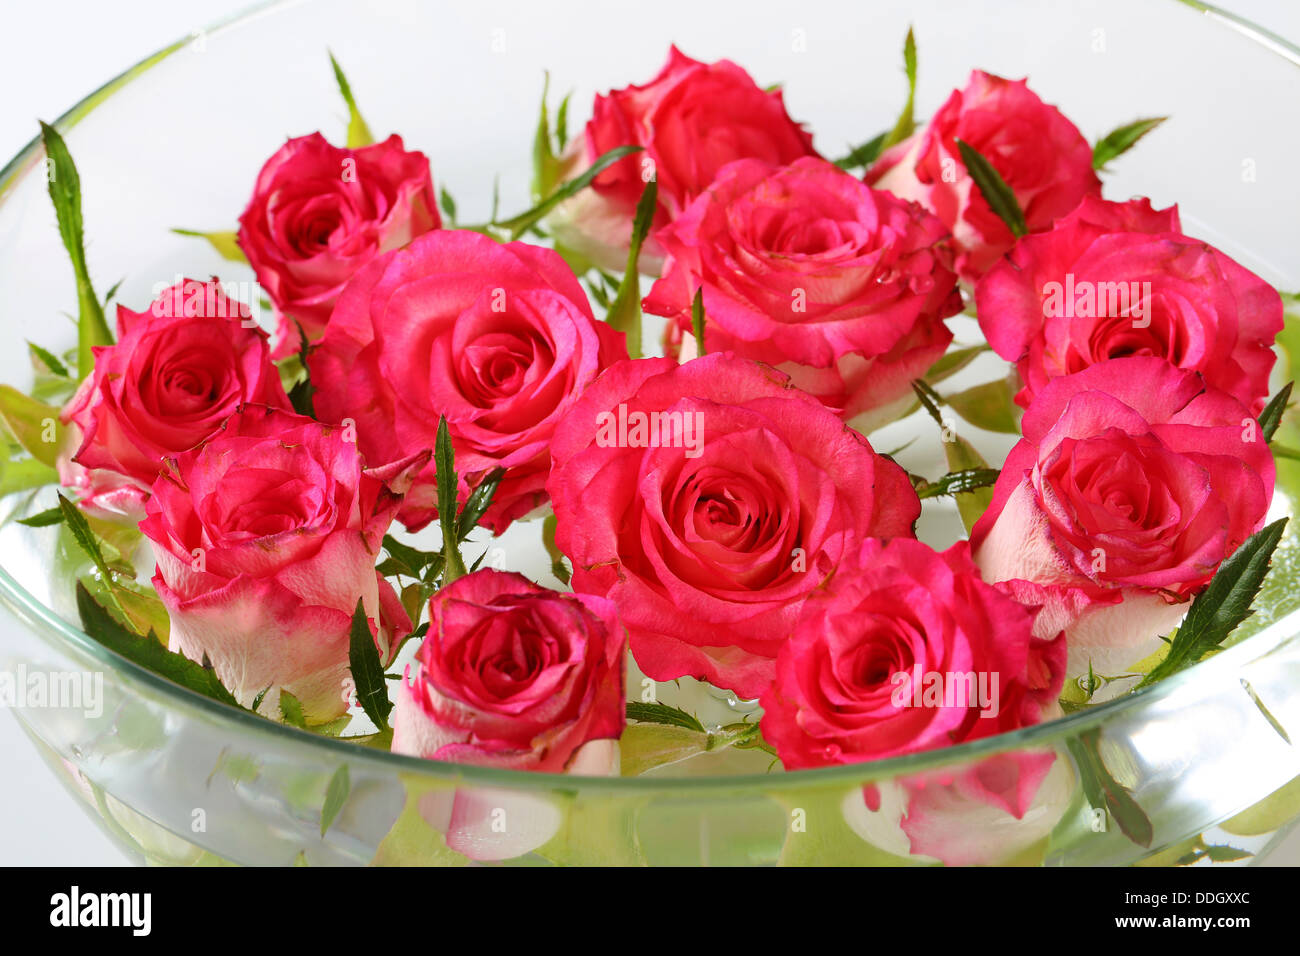 Auflösung Alamy a in -Bildmaterial -Fotos Roses und hoher in – bowl